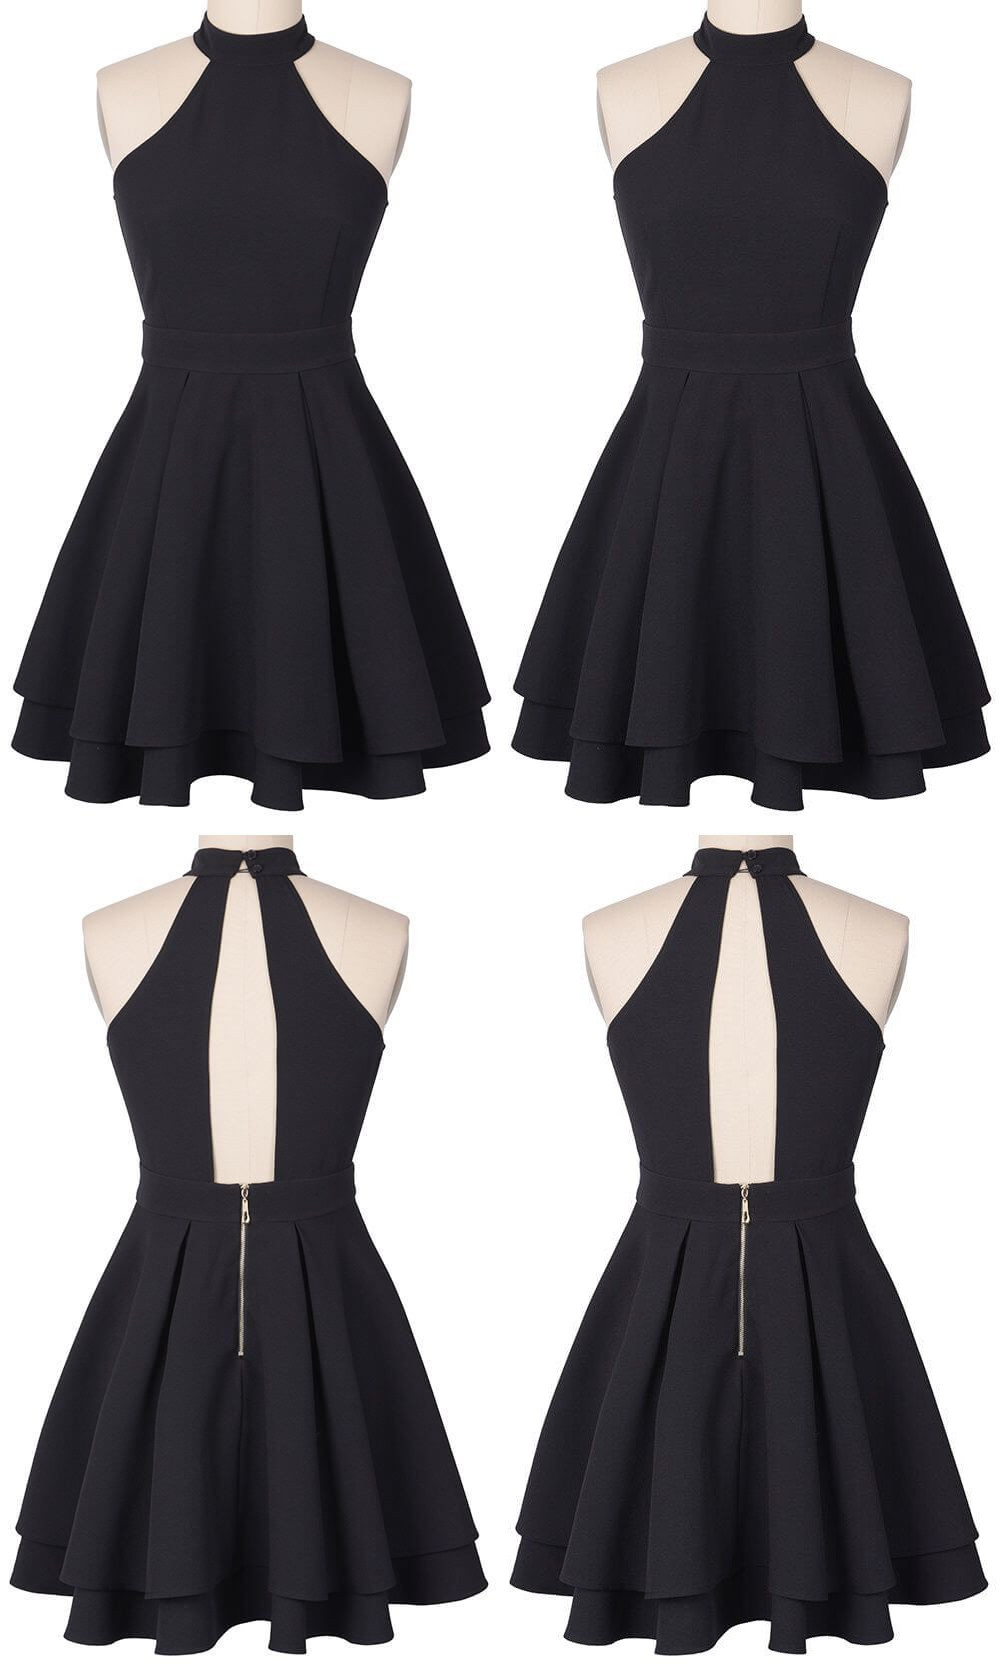 Cute Black Homecoming Dress,Halter Mini Short Prom Dress -   15 dress For Teens black ideas